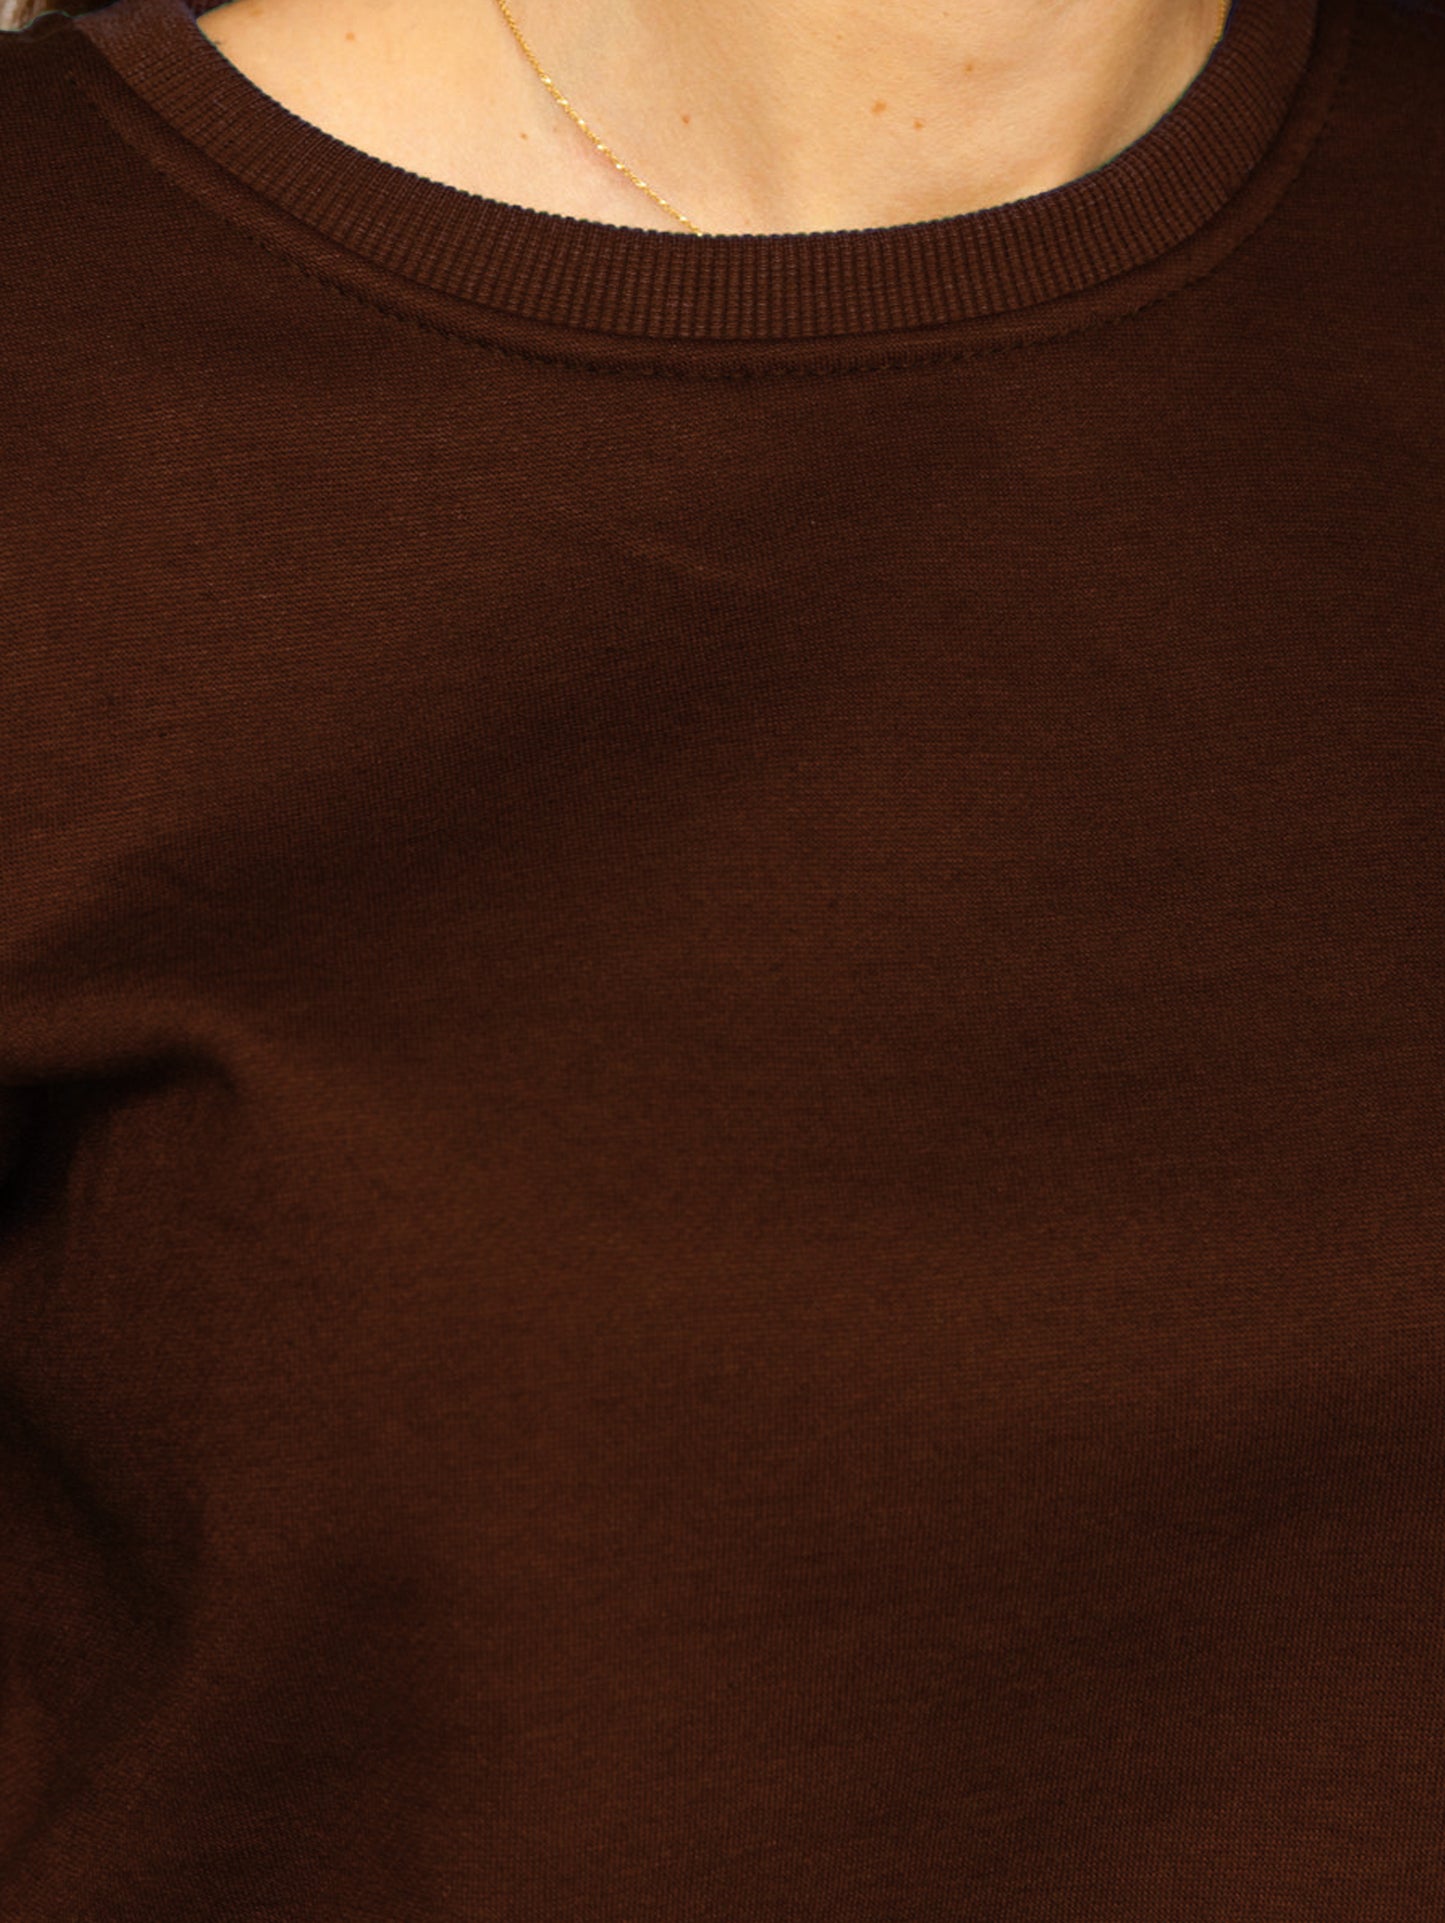 Women's Basic Brown Sweatshirt